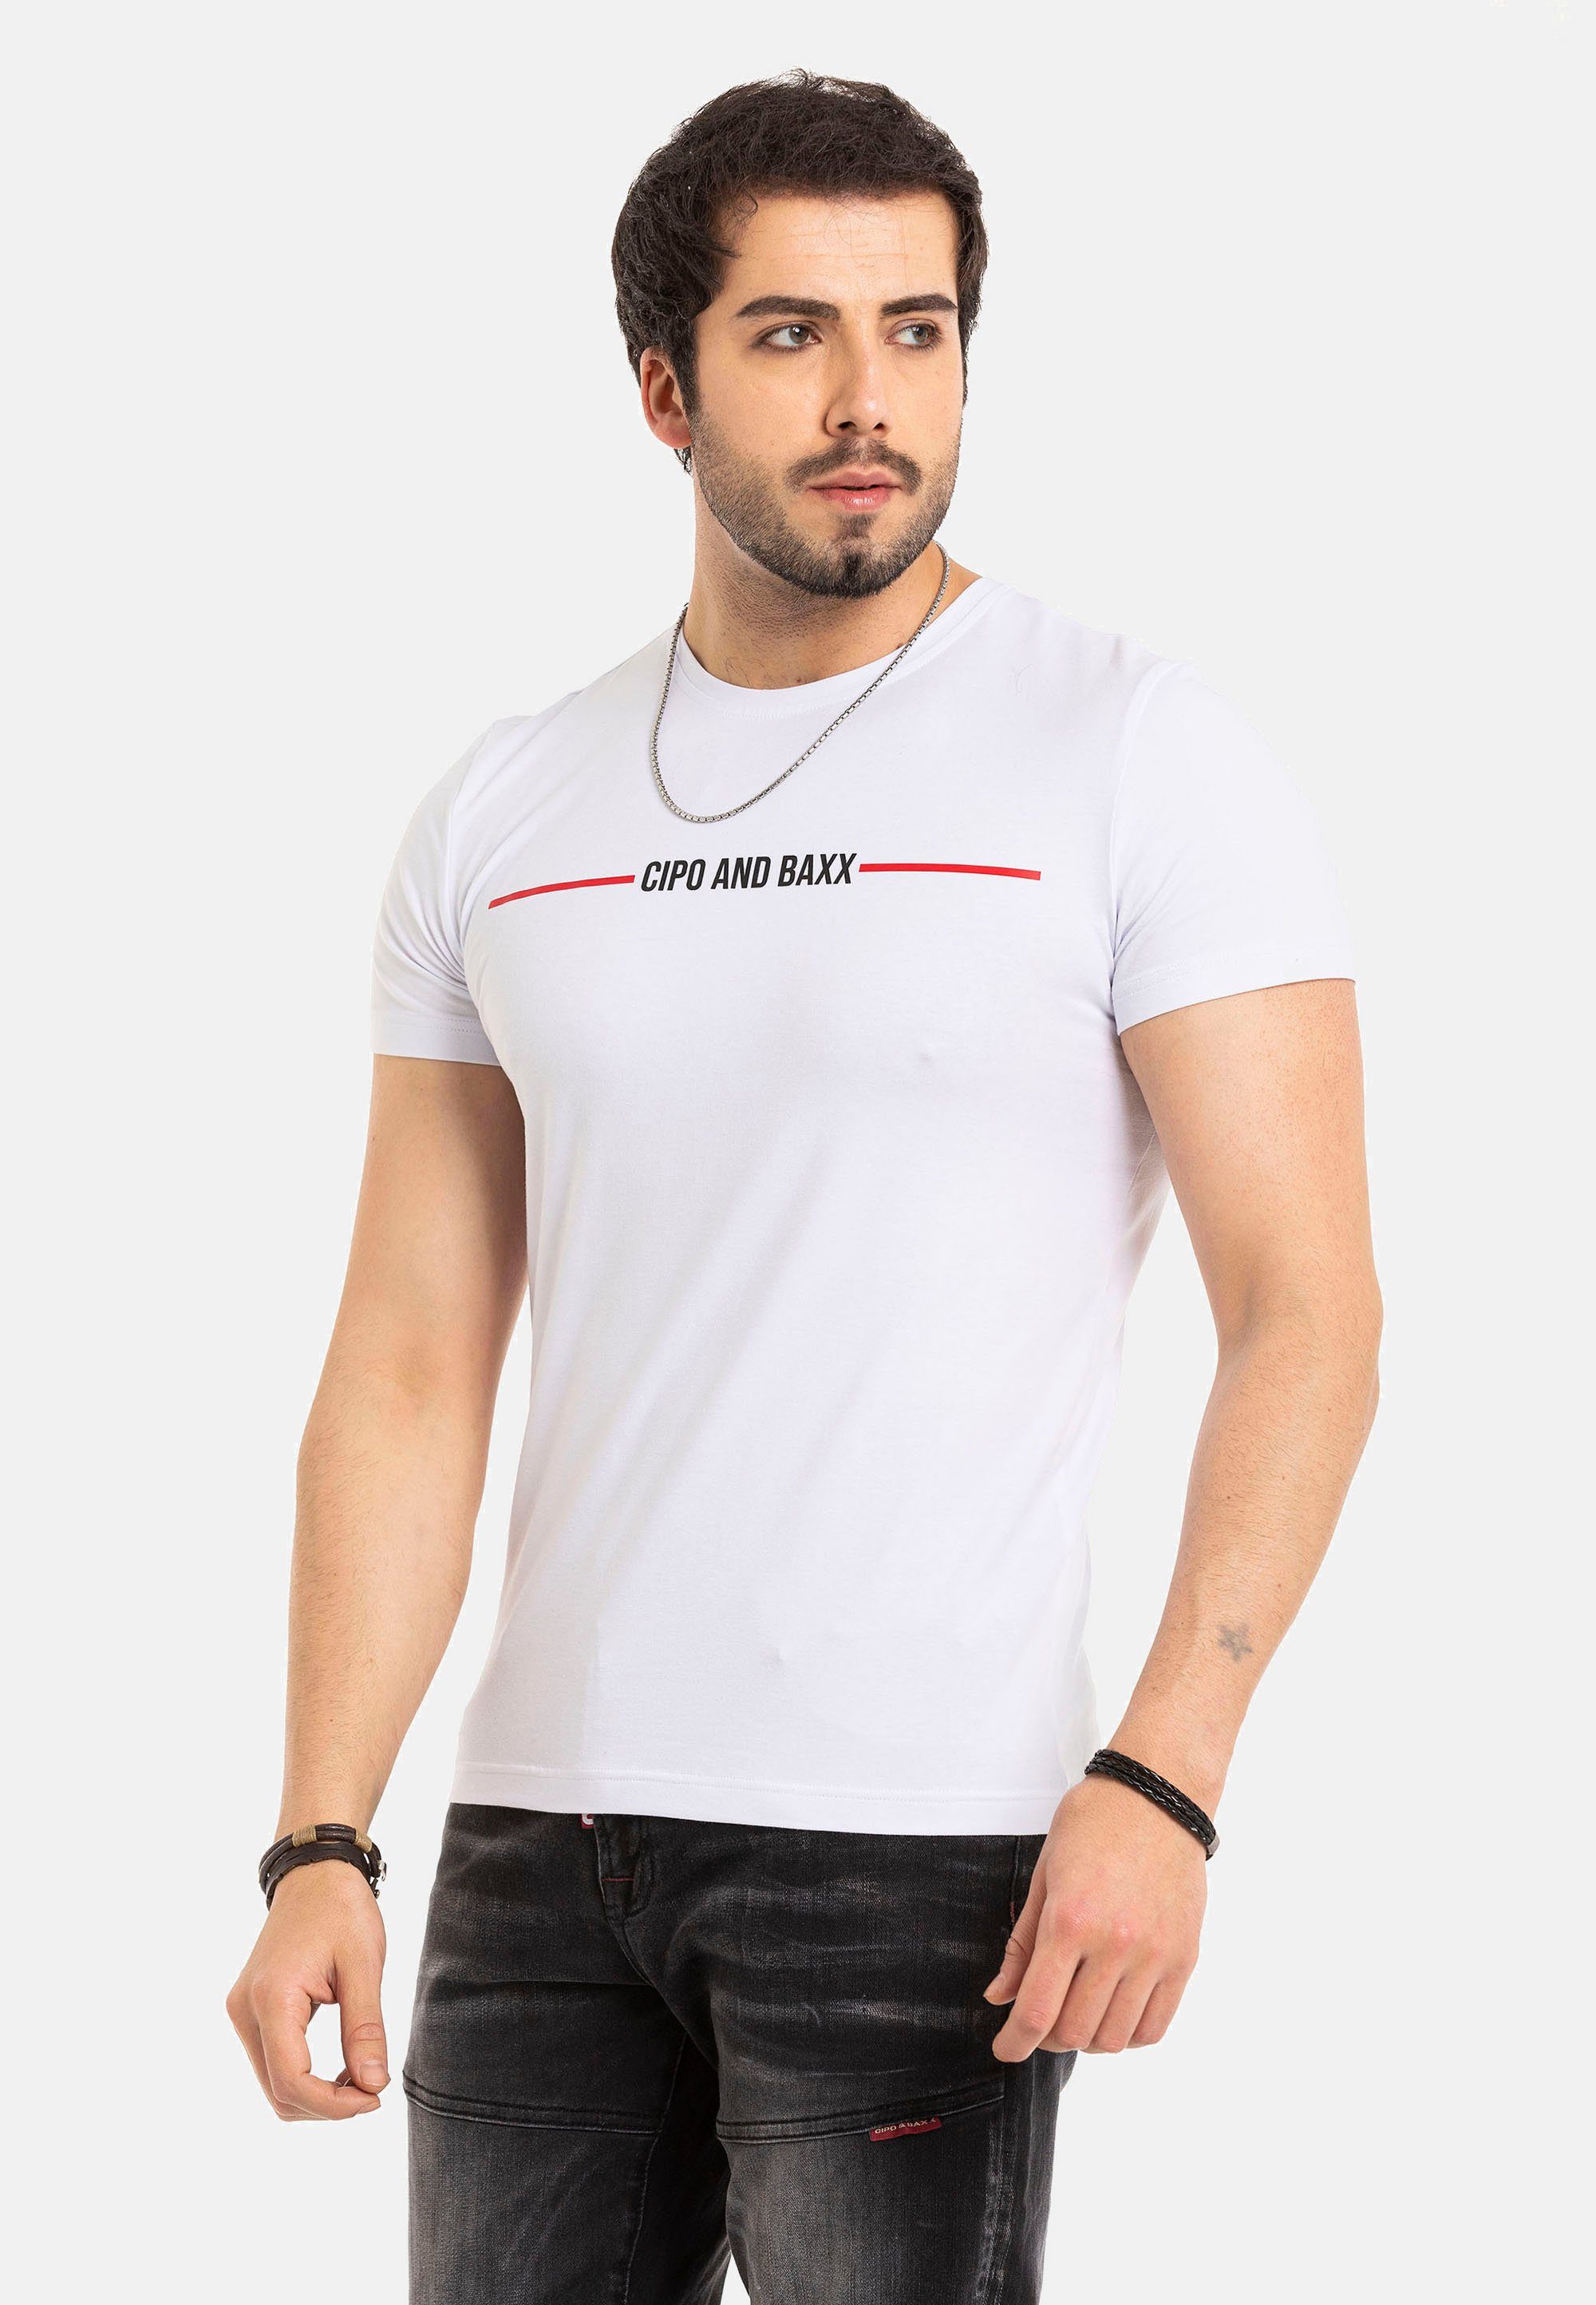 coolem Cipo T-Shirt weiß mit Markenprint & Baxx